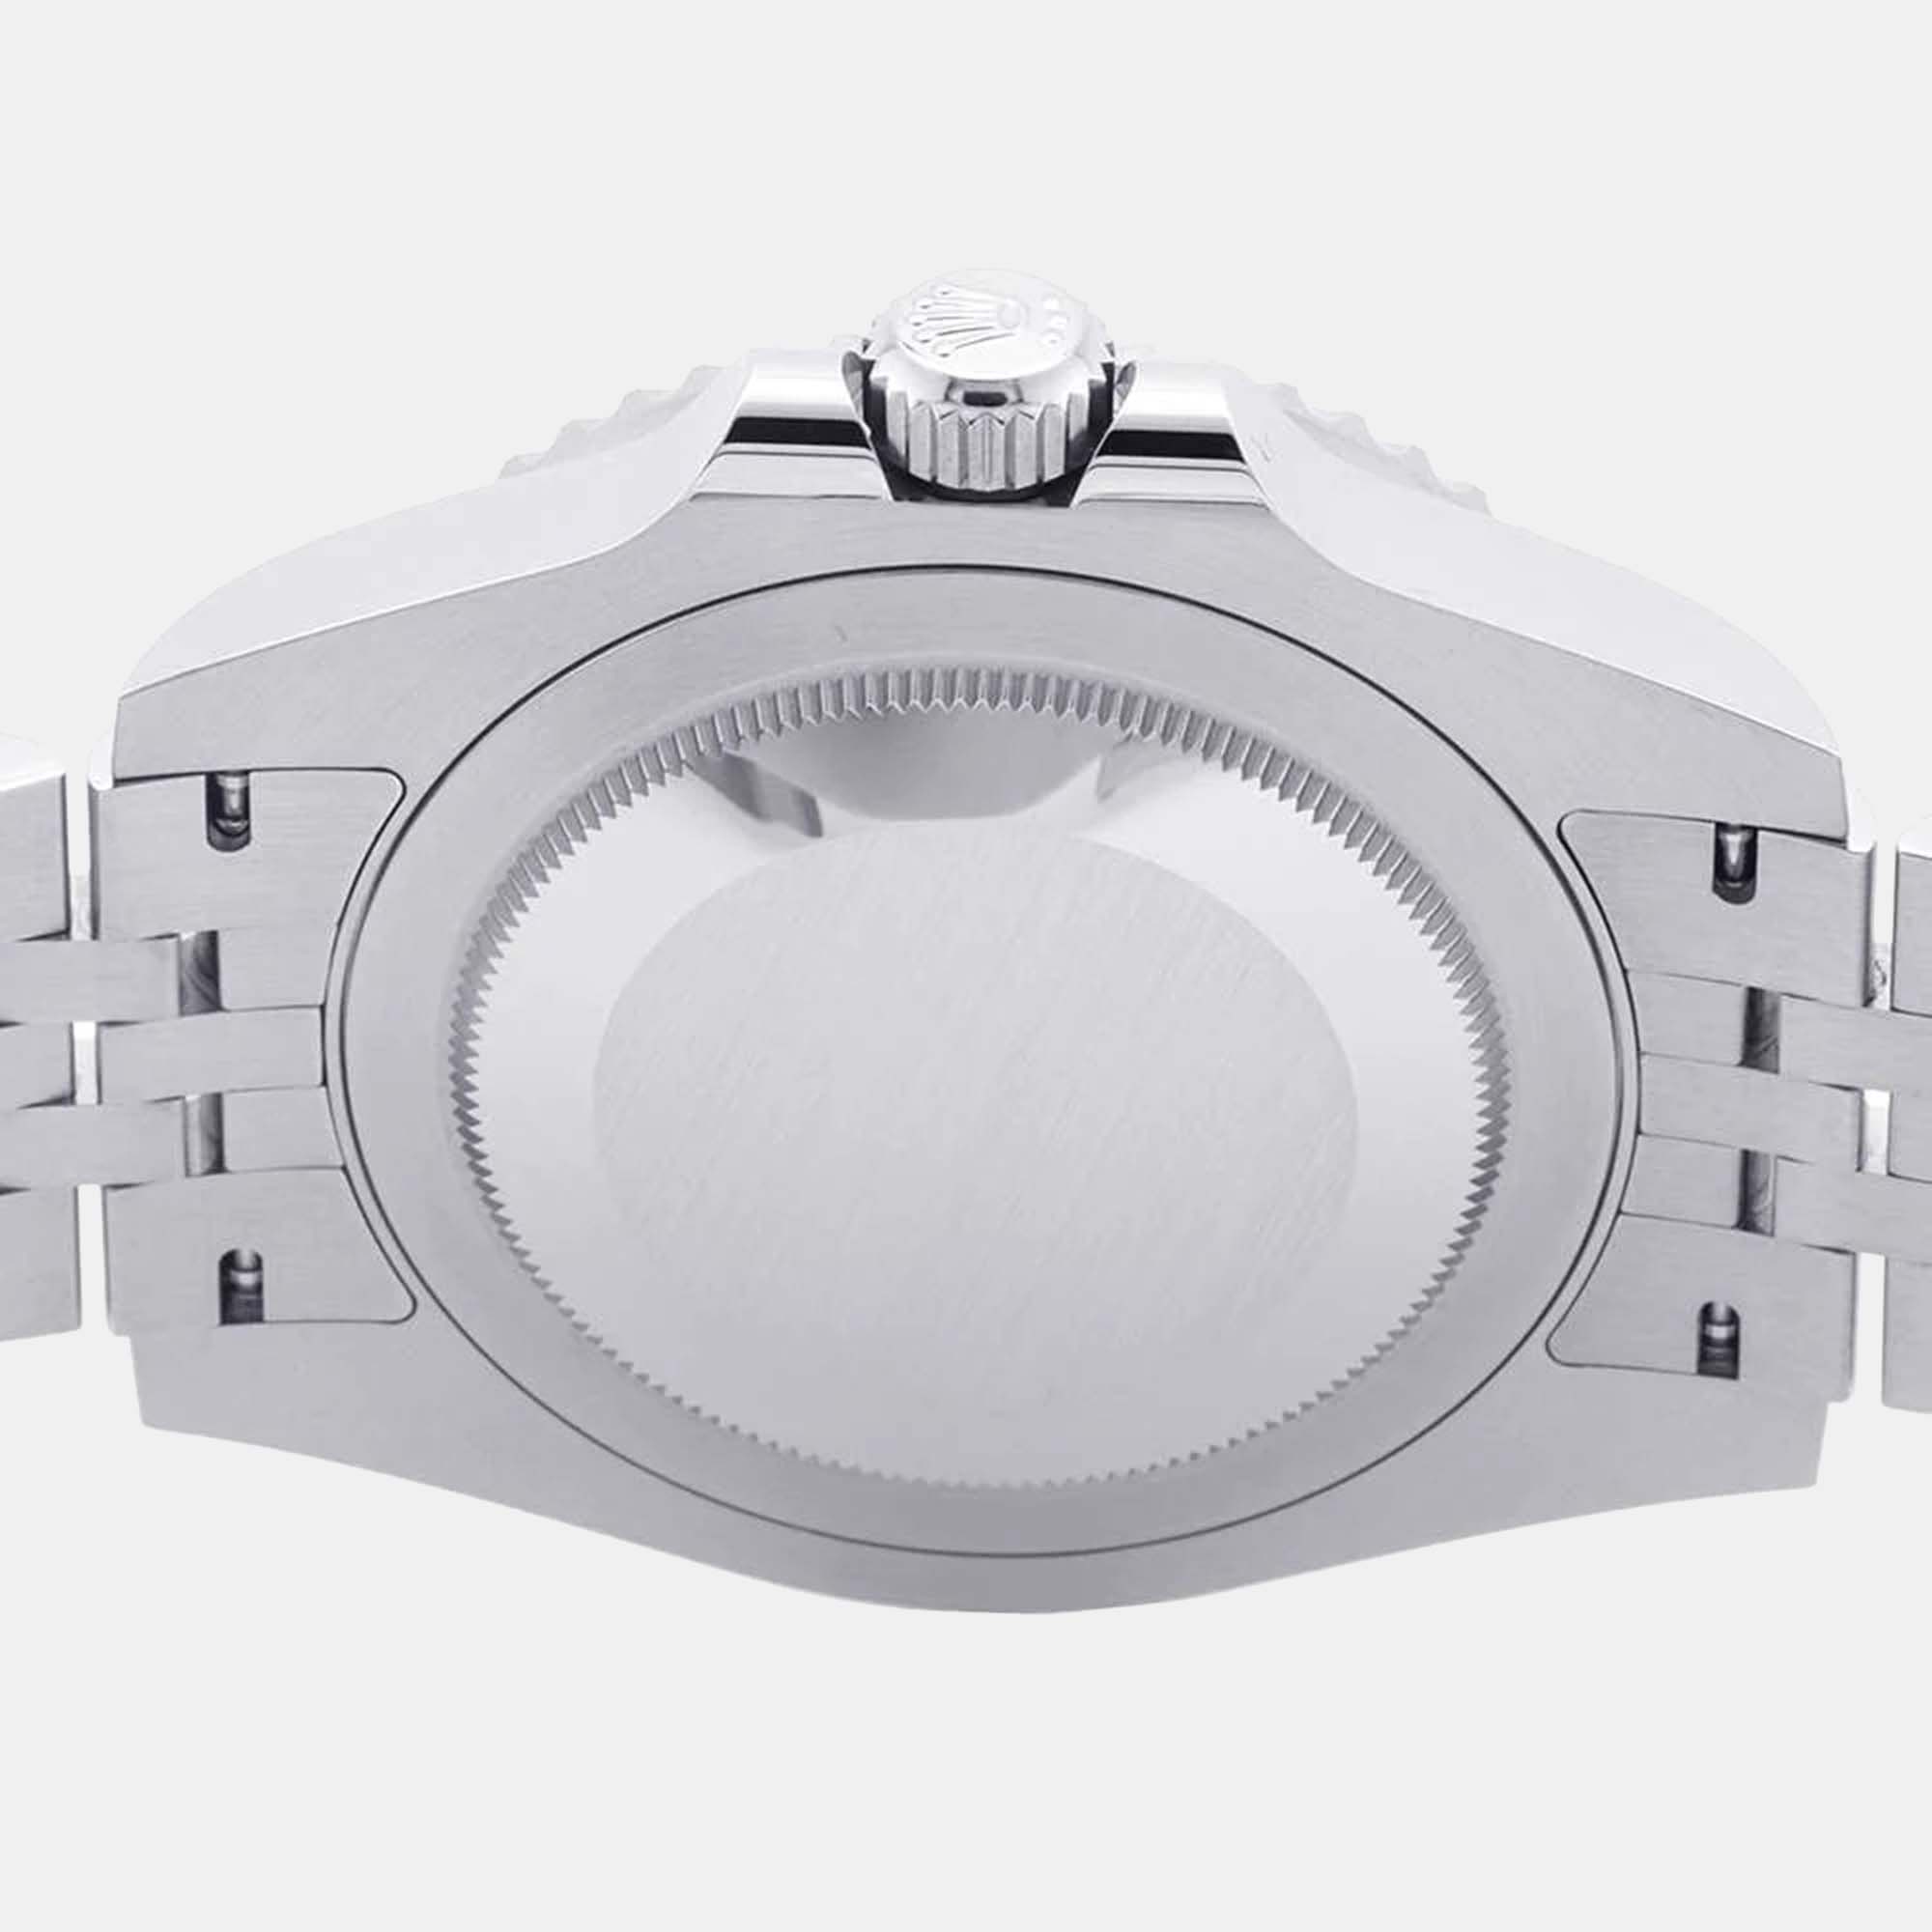 Rolex Black Stainless Steel GMT-Master II 126720VTNR Automatic Men's Wristwatch 40 Mm